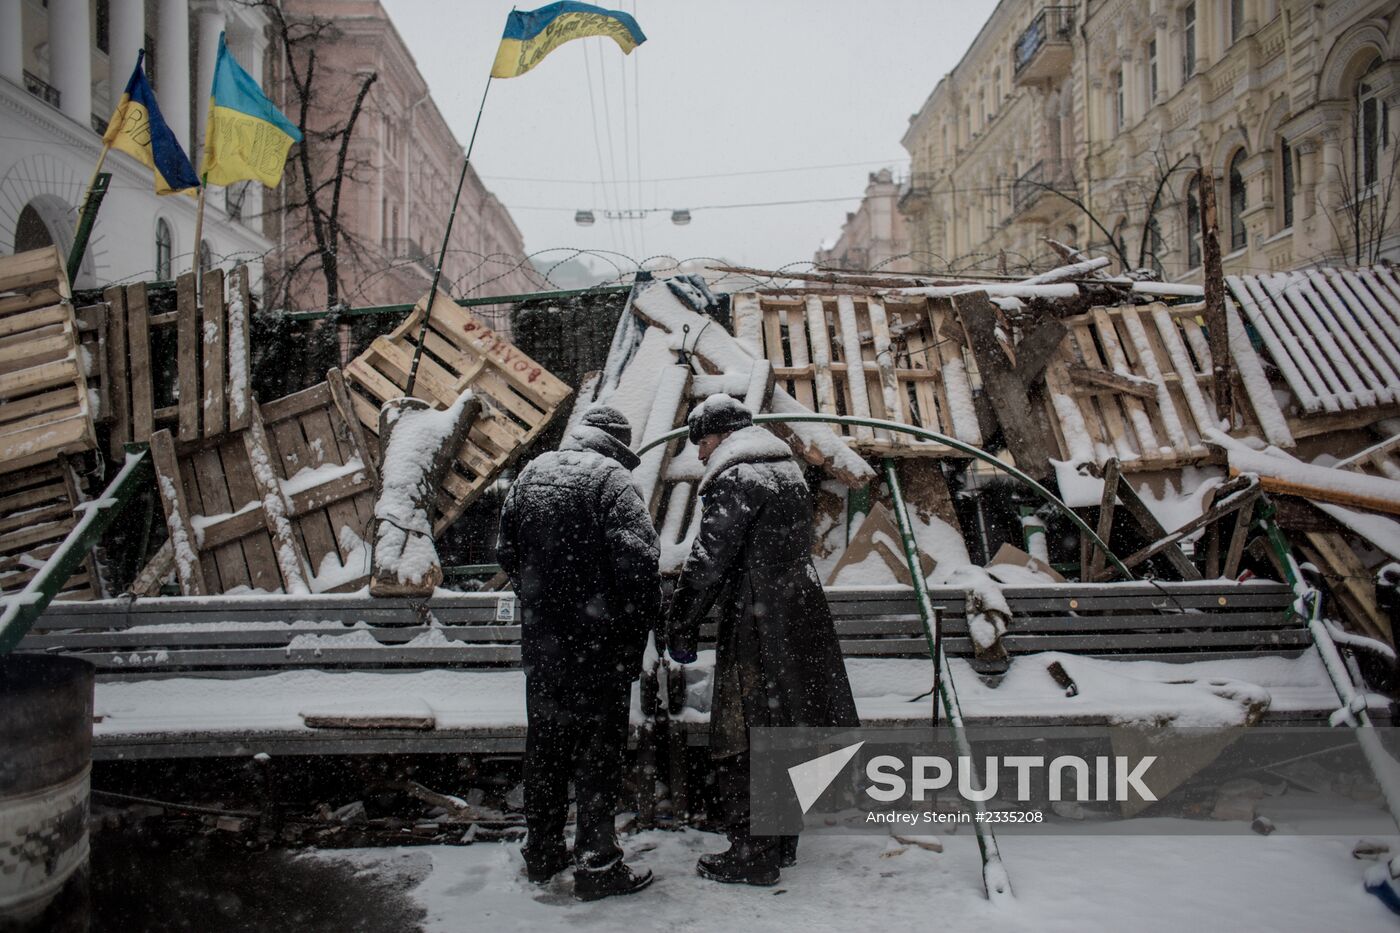 Situation in Ukraine